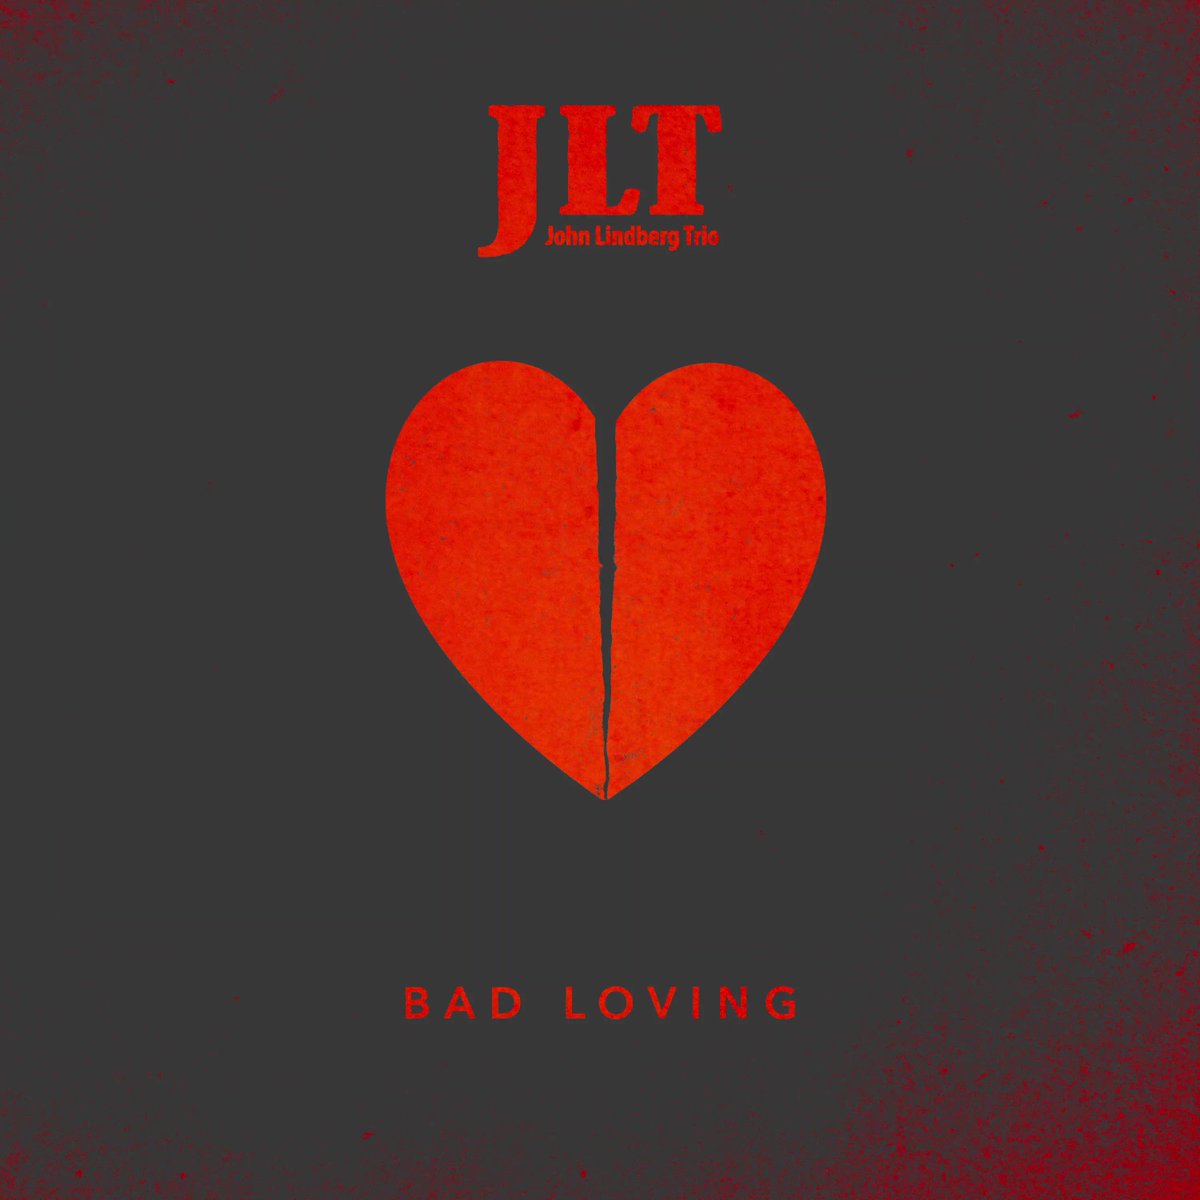 Sweden's Rockabilly kings John Lindberg Trio is back with the brand new single 'Bad Loving' 💥

Listen here: https://t.co/nju3a2ETWm https://t.co/EZN2otg3pc